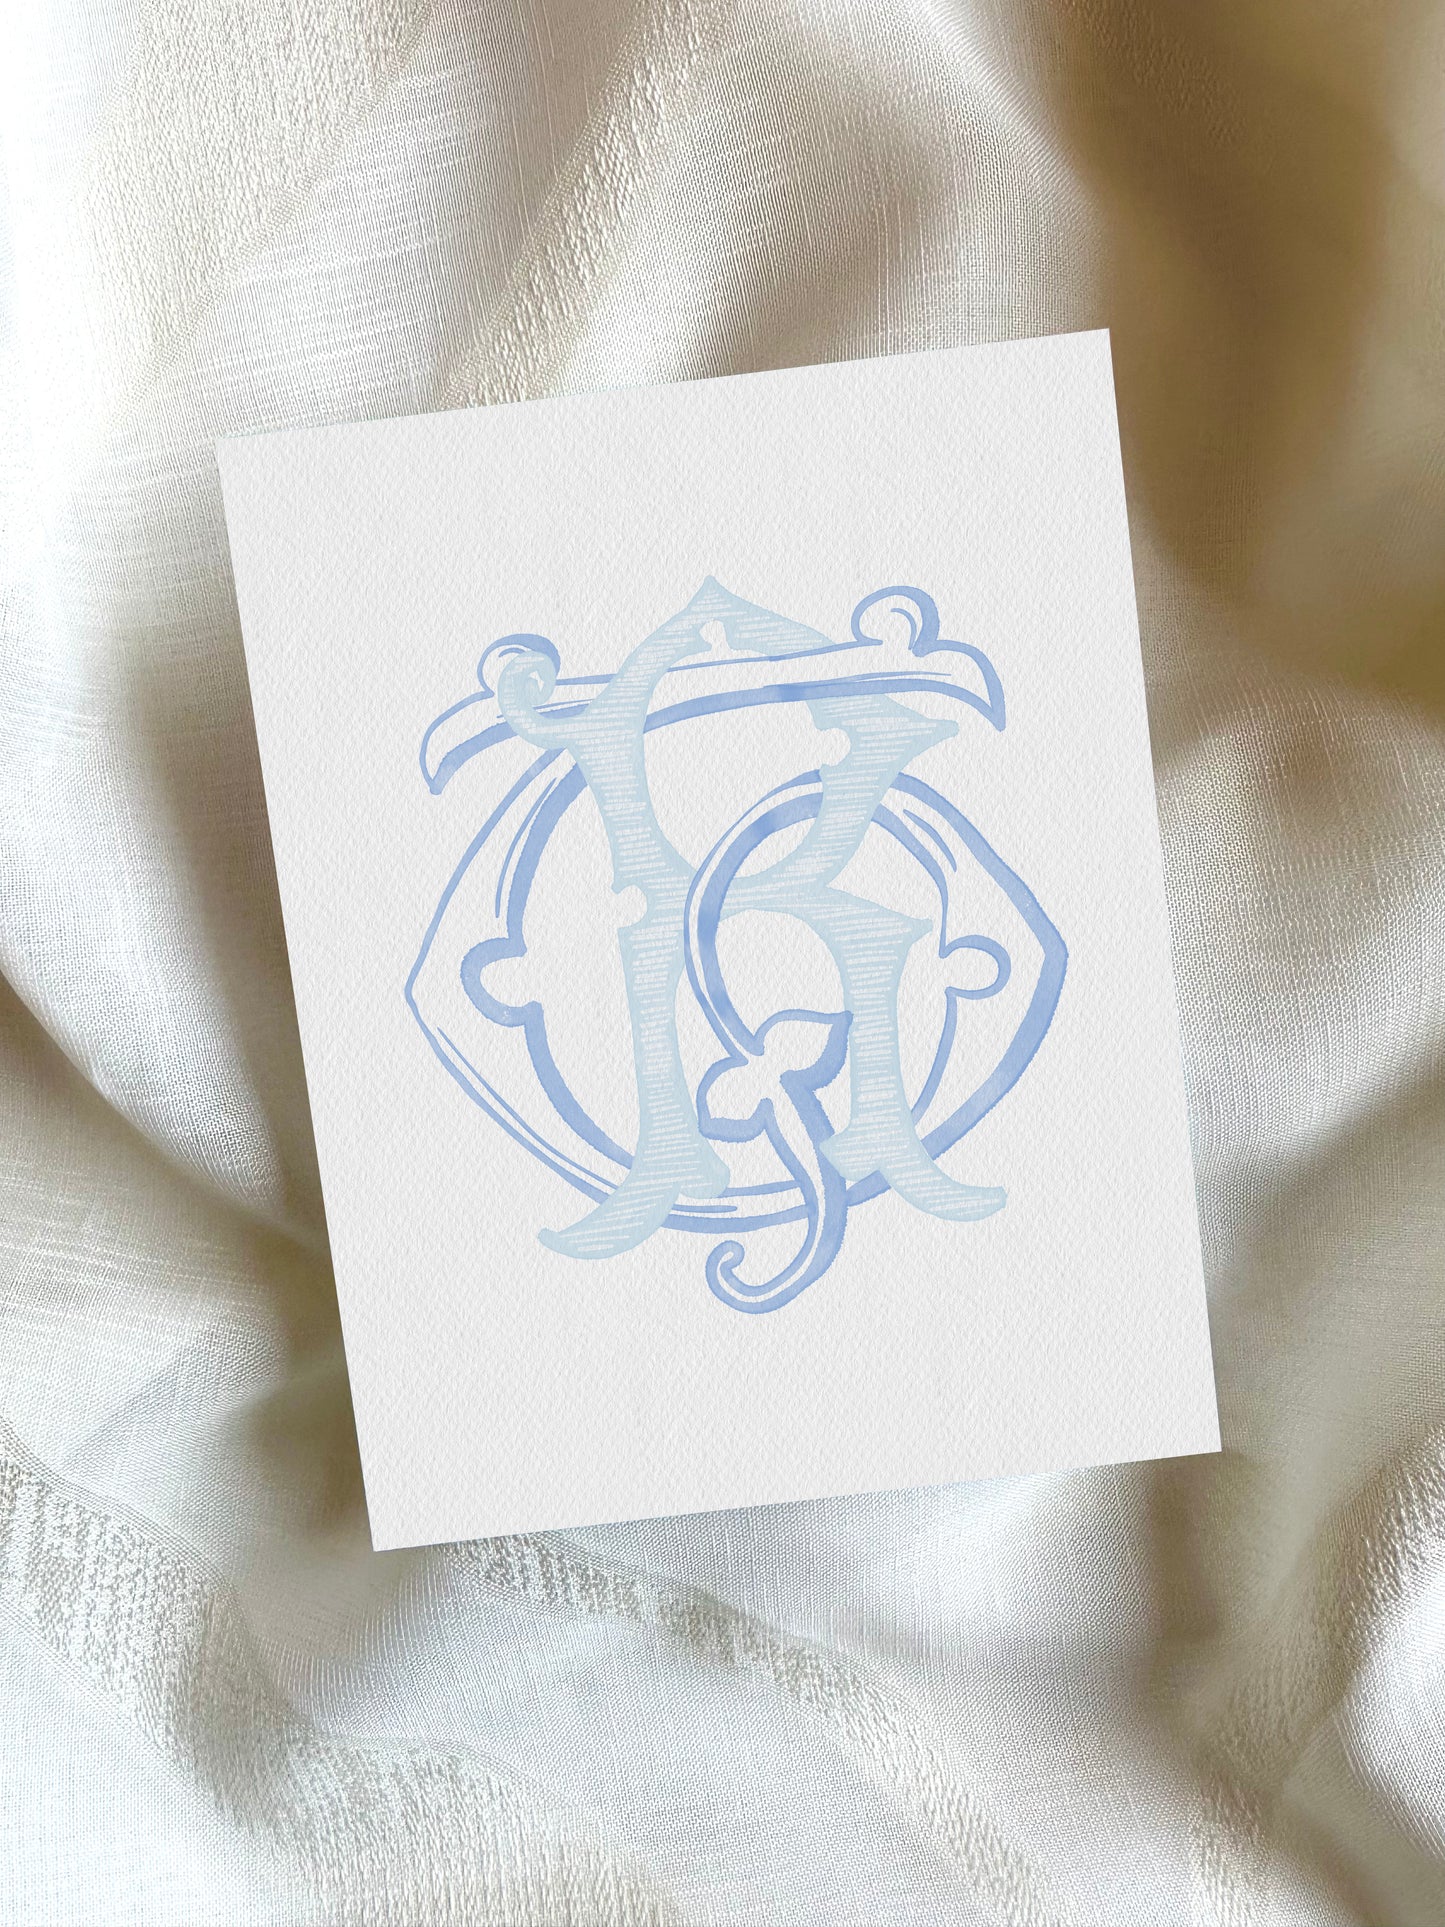 2 Letter Monogram with Letters RT TR | Digital Download - Wedding Monogram SVG, Personal Logo, Wedding Logo for Wedding Invitations The Wedding Crest Lab